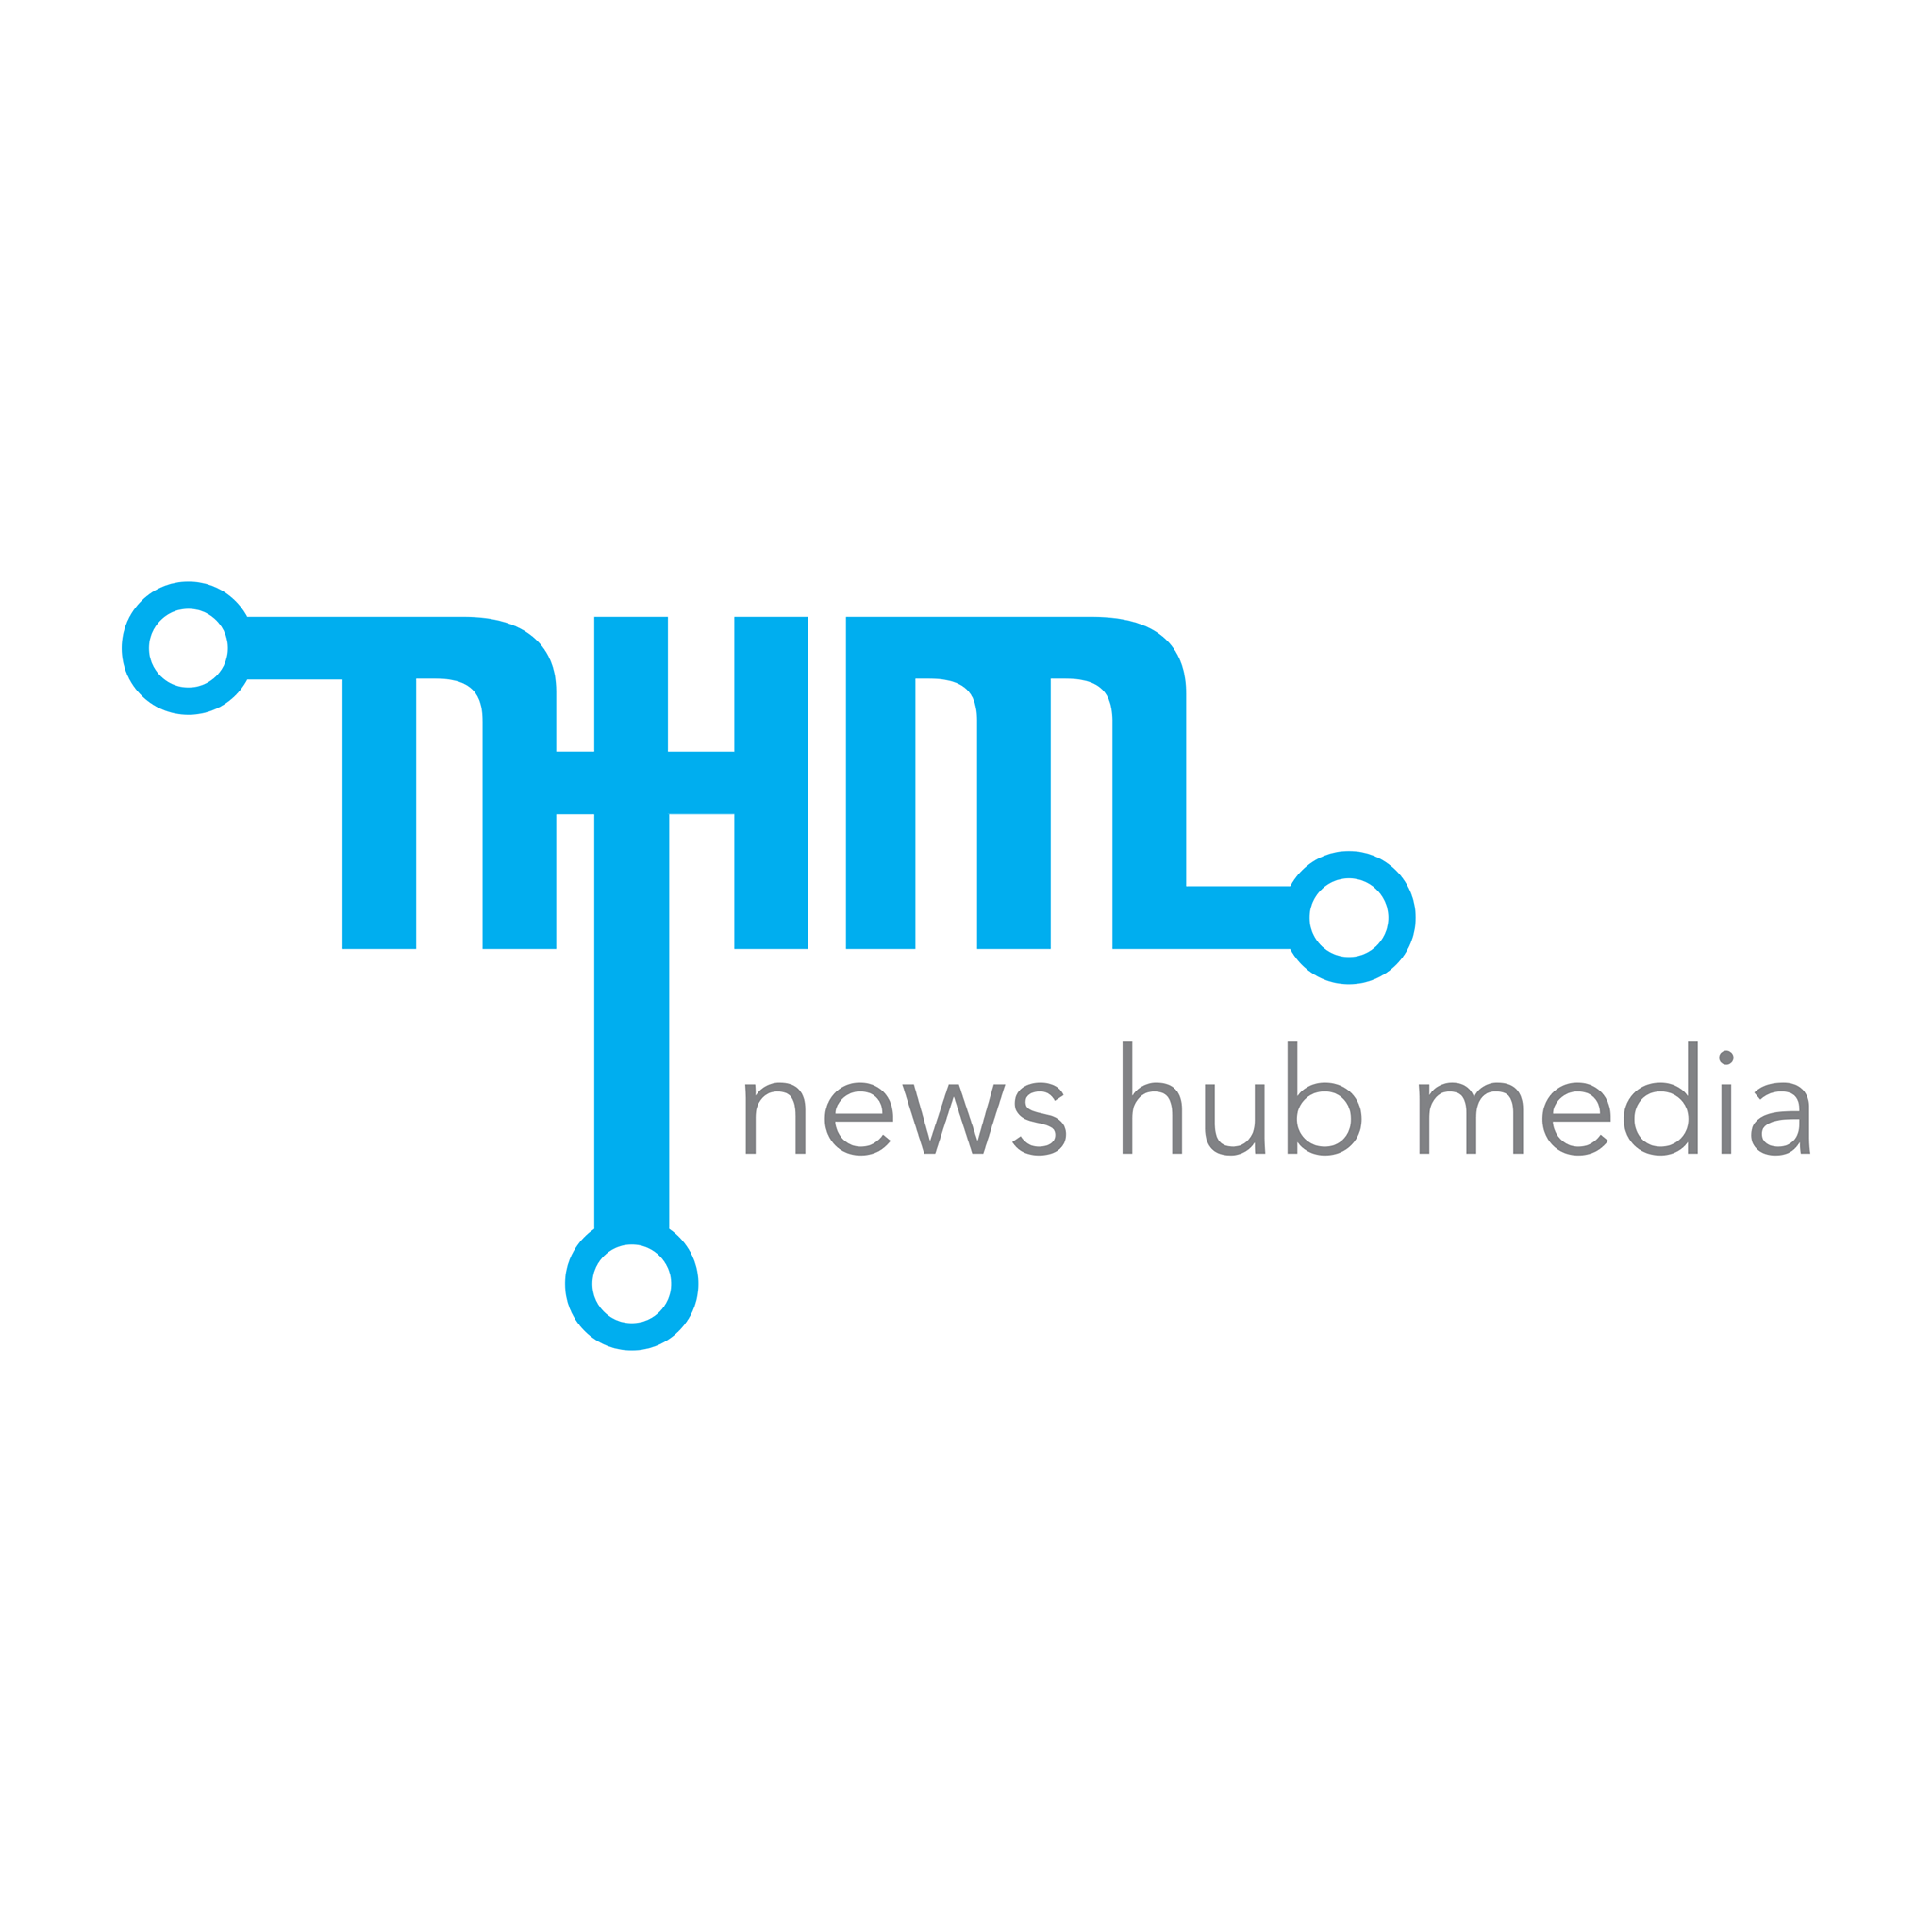 News Hub Media